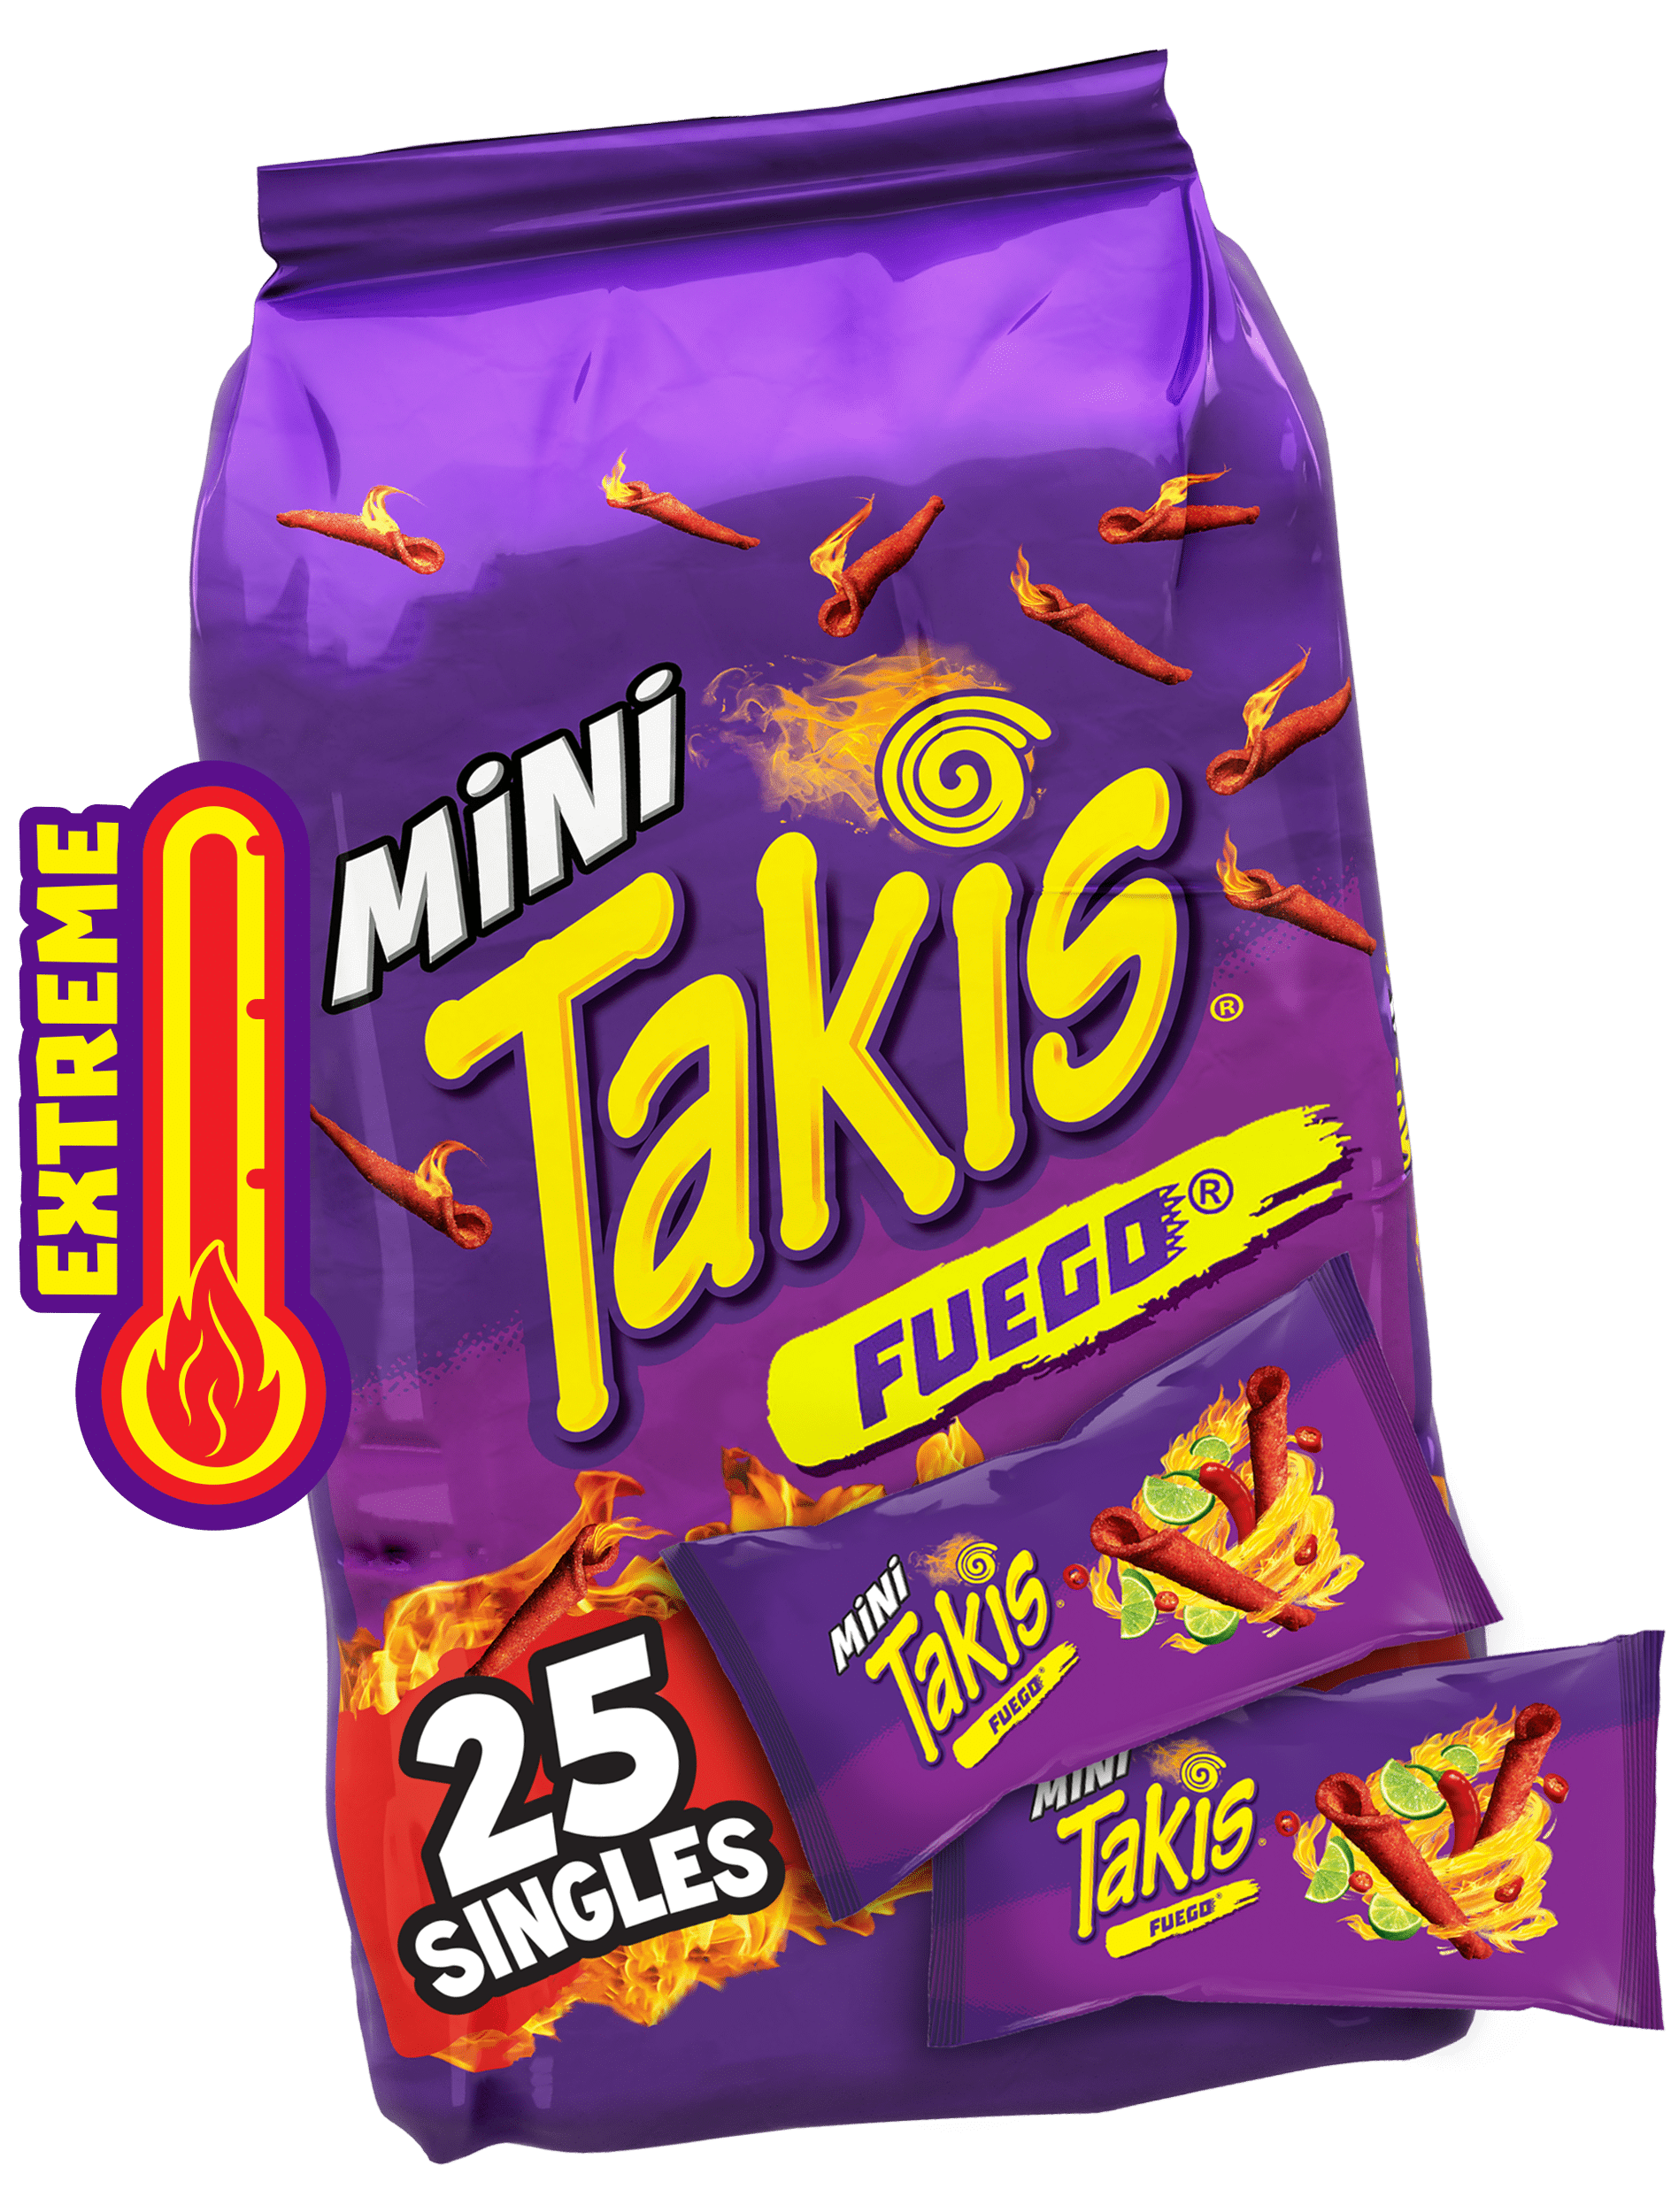 Takis Fuego Mini 25 pc / 1.23 oz Bite Size Multipack, Hot Chili